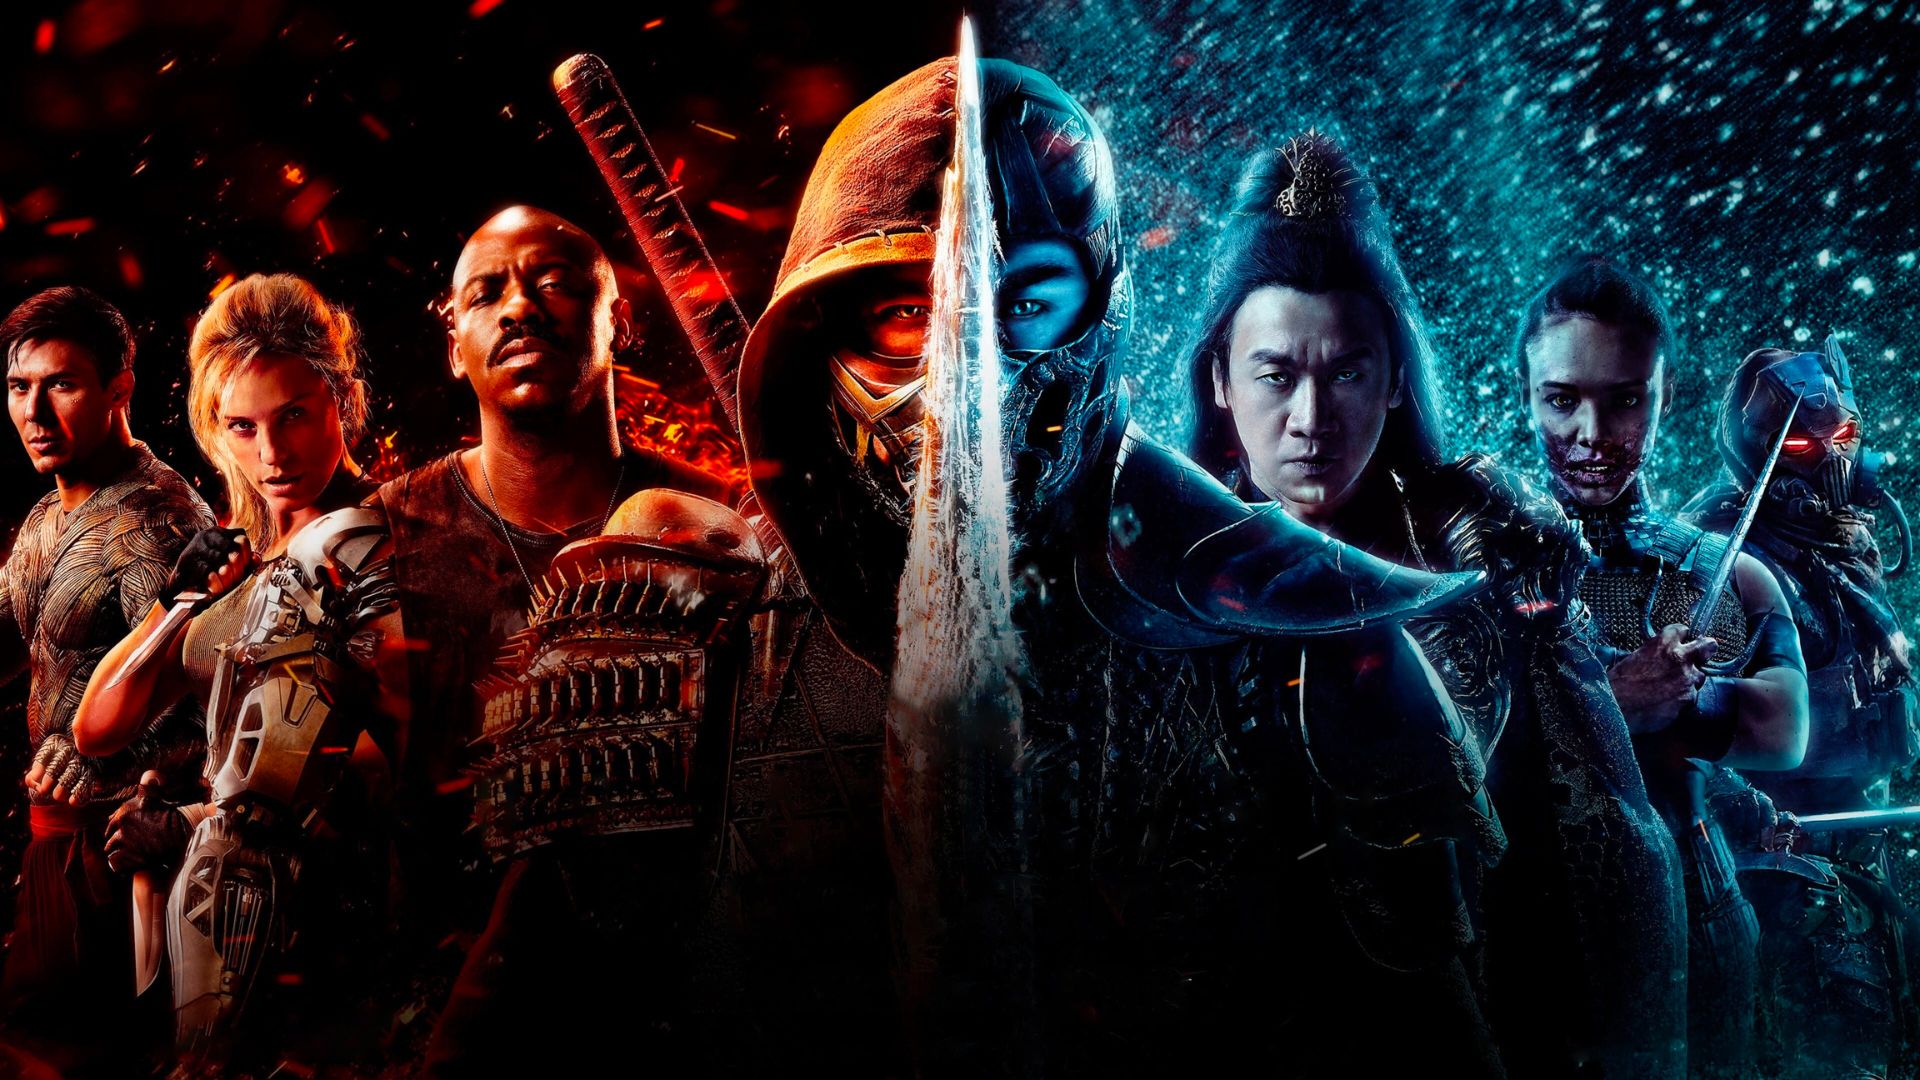 Poster Mortal Kombat